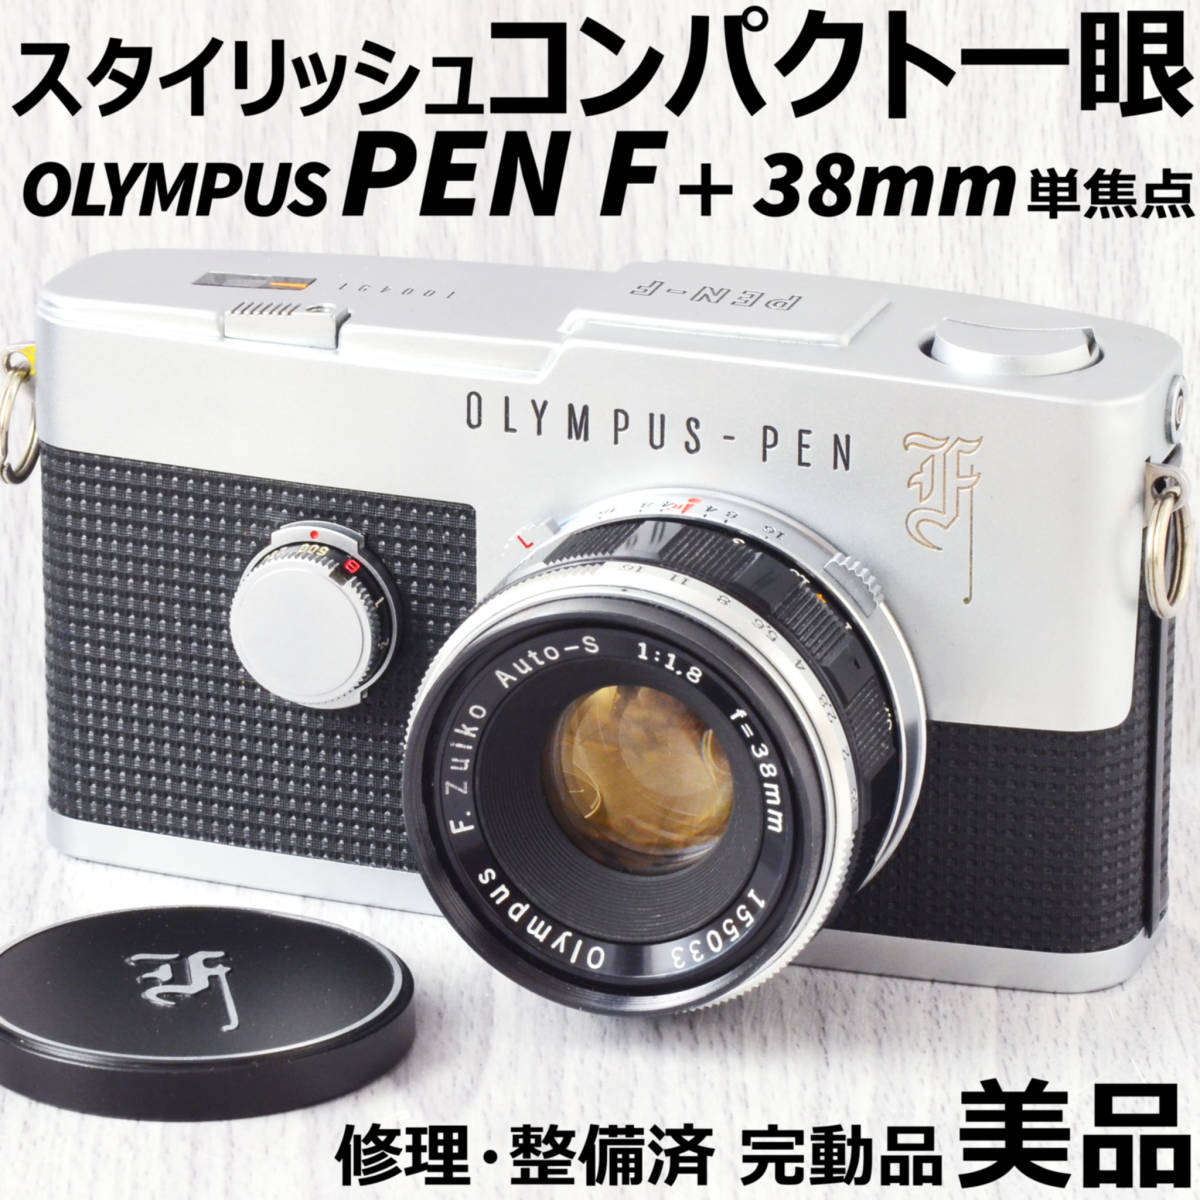 OLYMPUS PEN F + 38mm f1.8 ケース付 修理整備済 完動品 | www.tspea.org